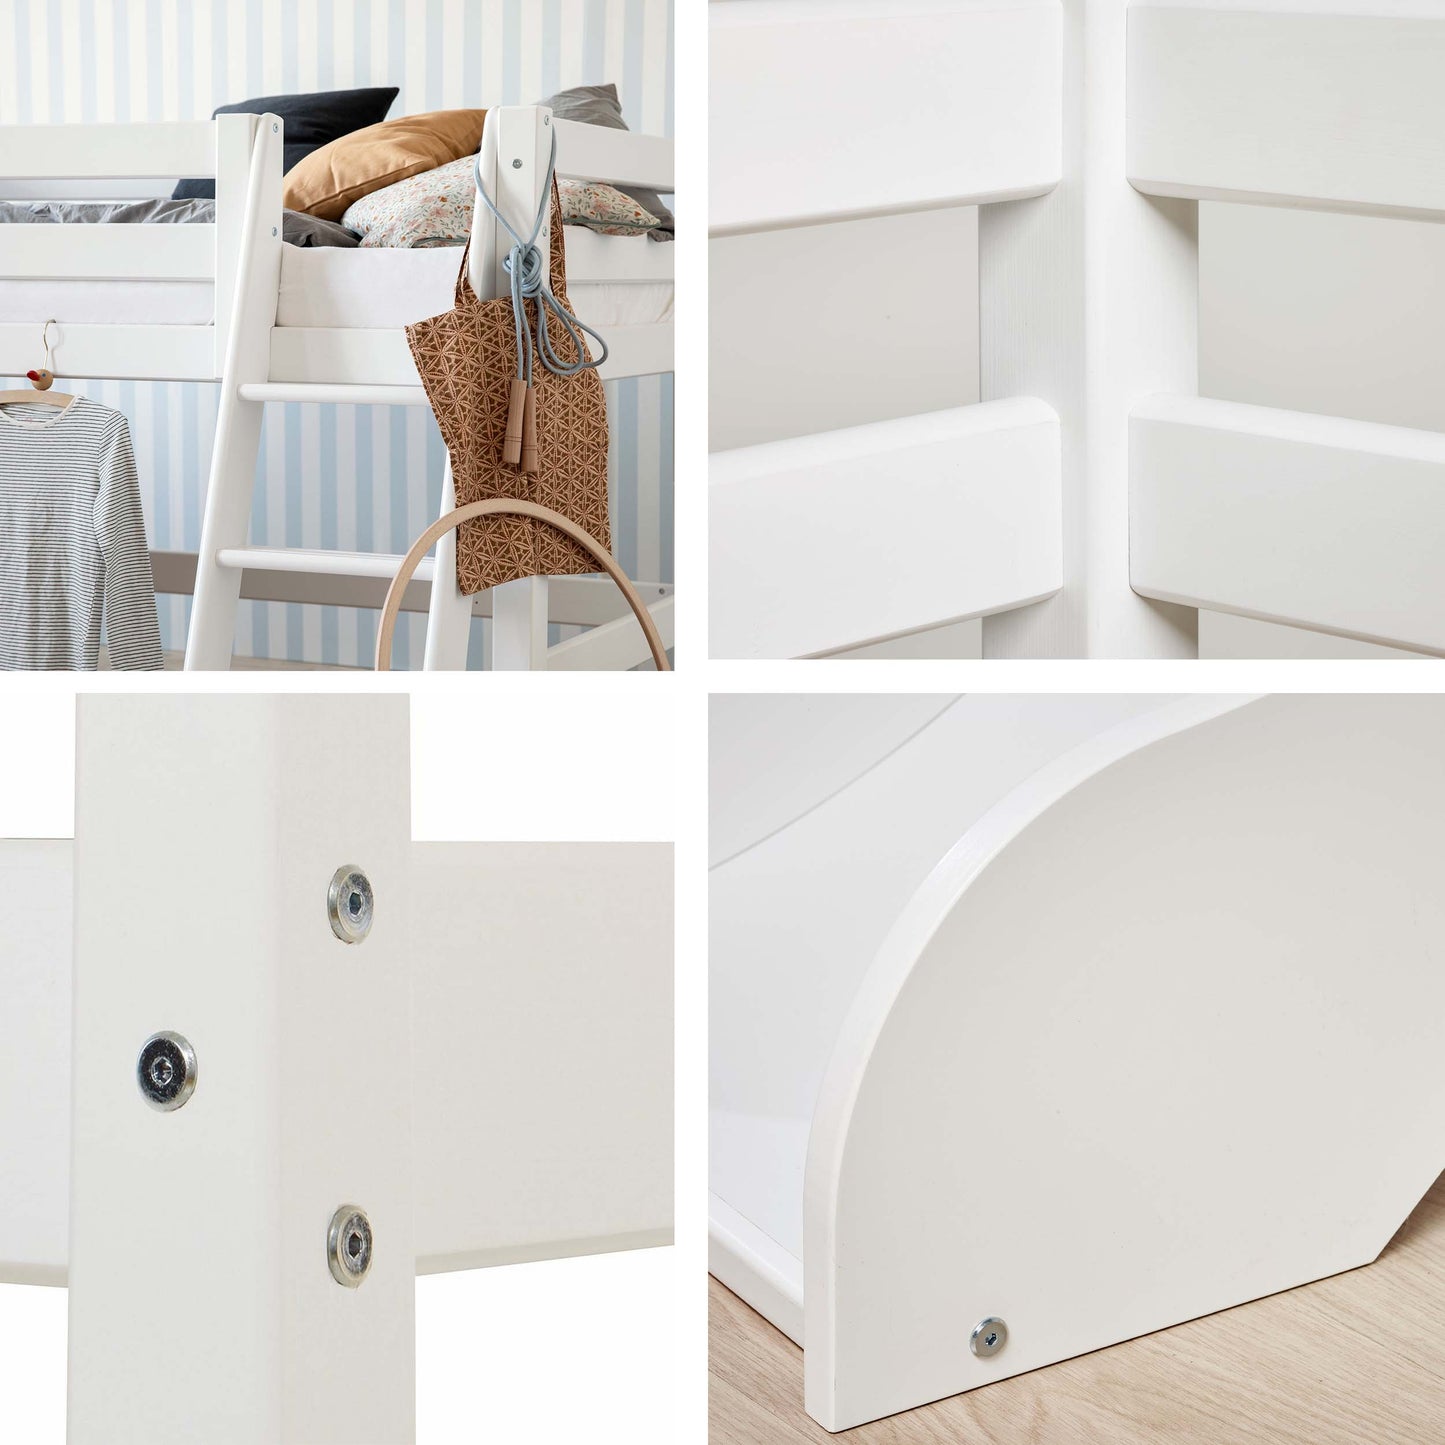 Hoppekids Eco Luxury Mid Sleeper Bed with Slide - White